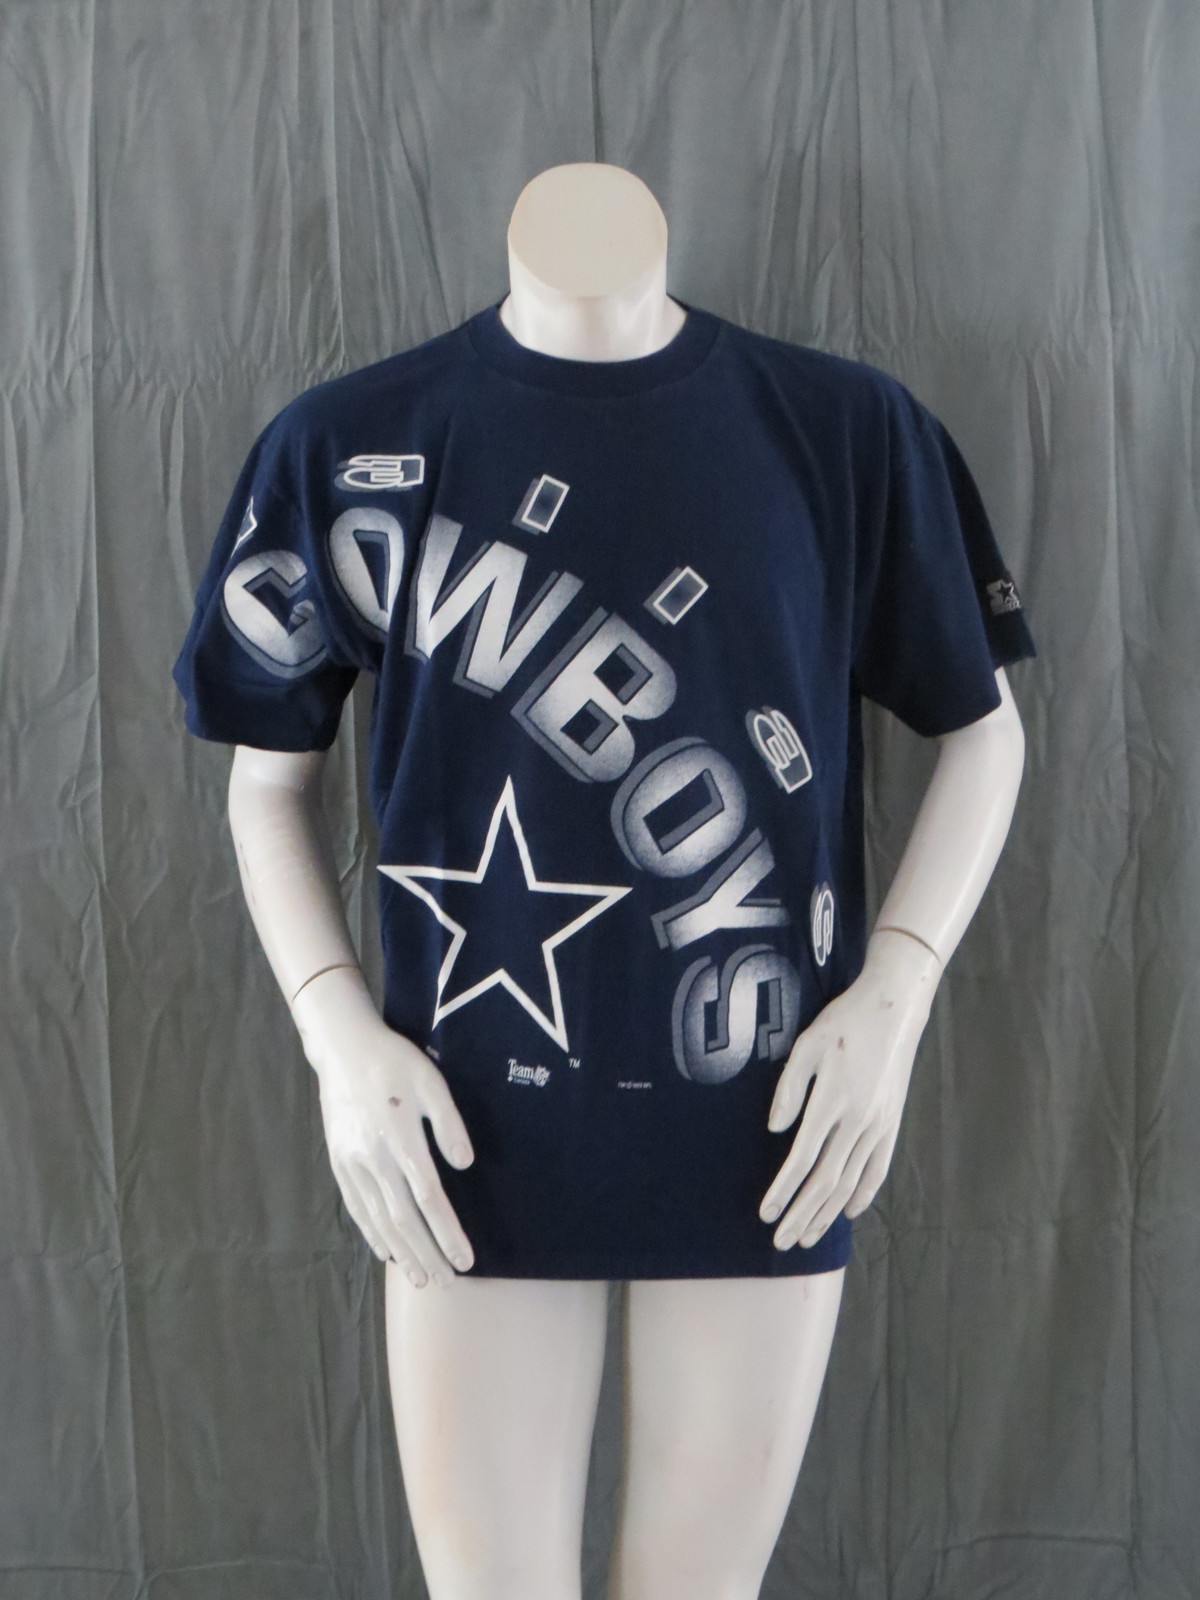 Primary image for Dallas Cowboys Shirt (VTG) -Front Big Script Graphic -By Starter - Men's Large